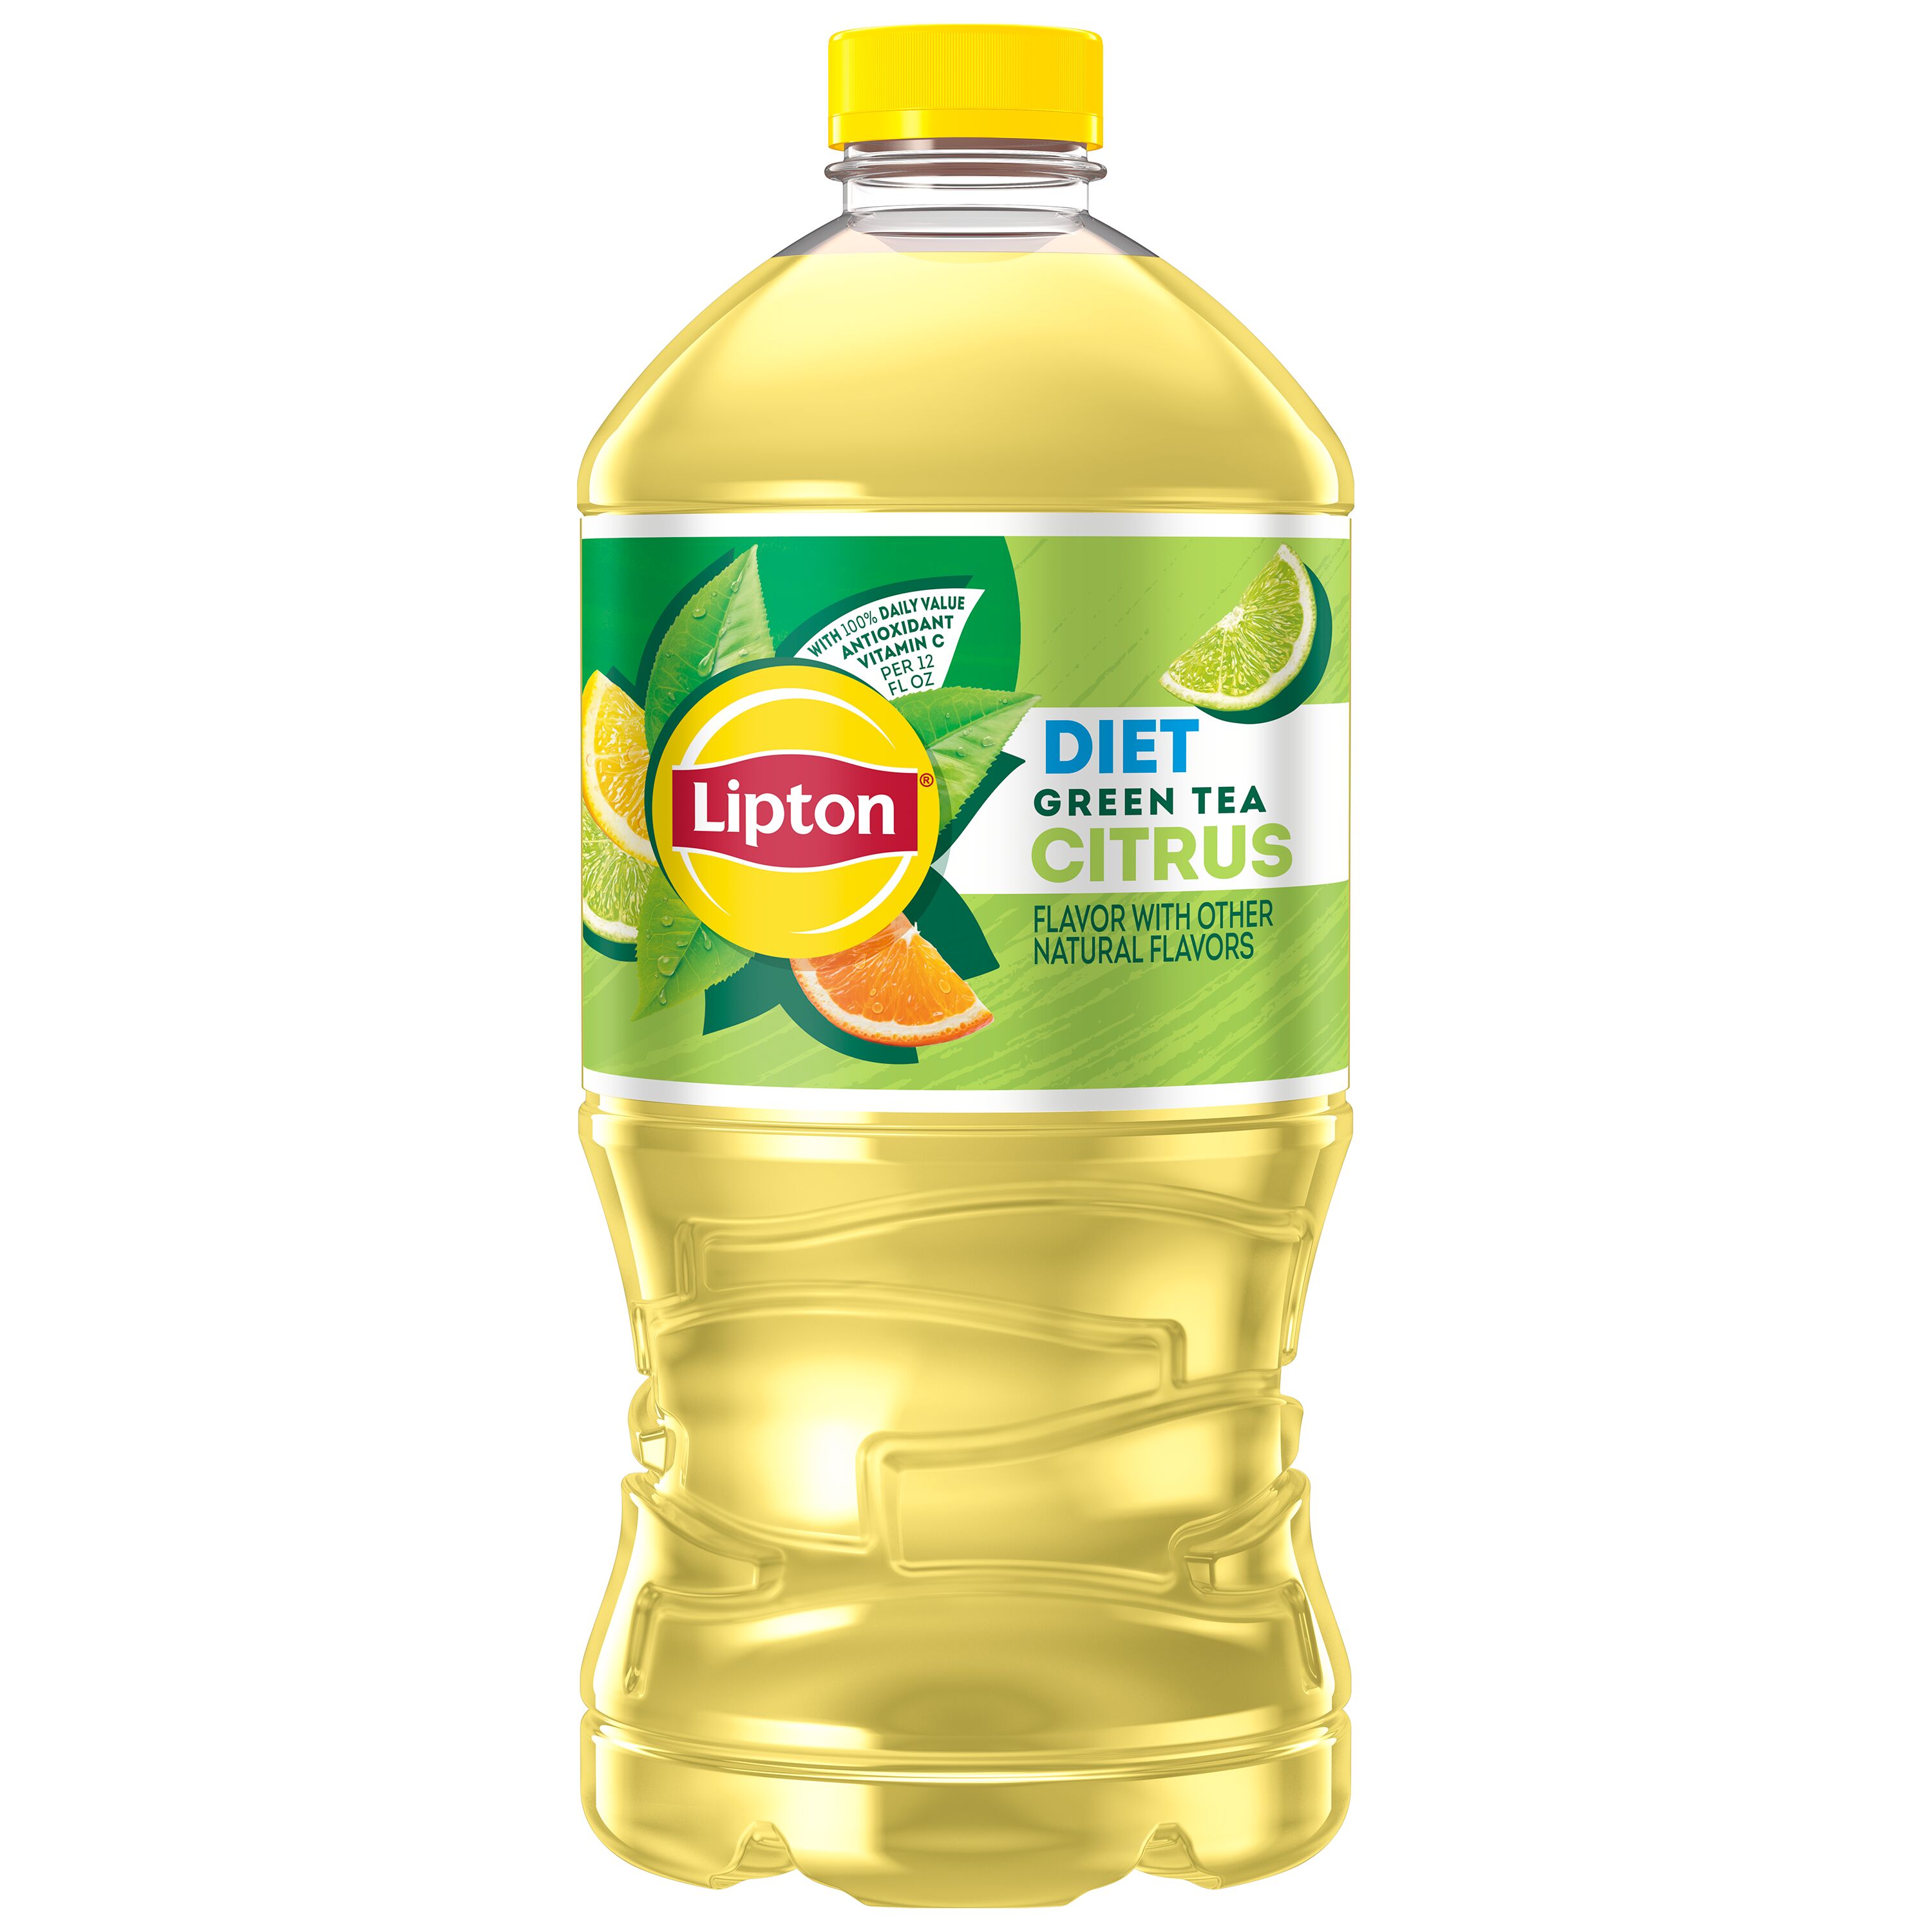 Lipton Diet Green Tea Citrus Iced Tea, 64 fl oz Bottle - image 1 of 5